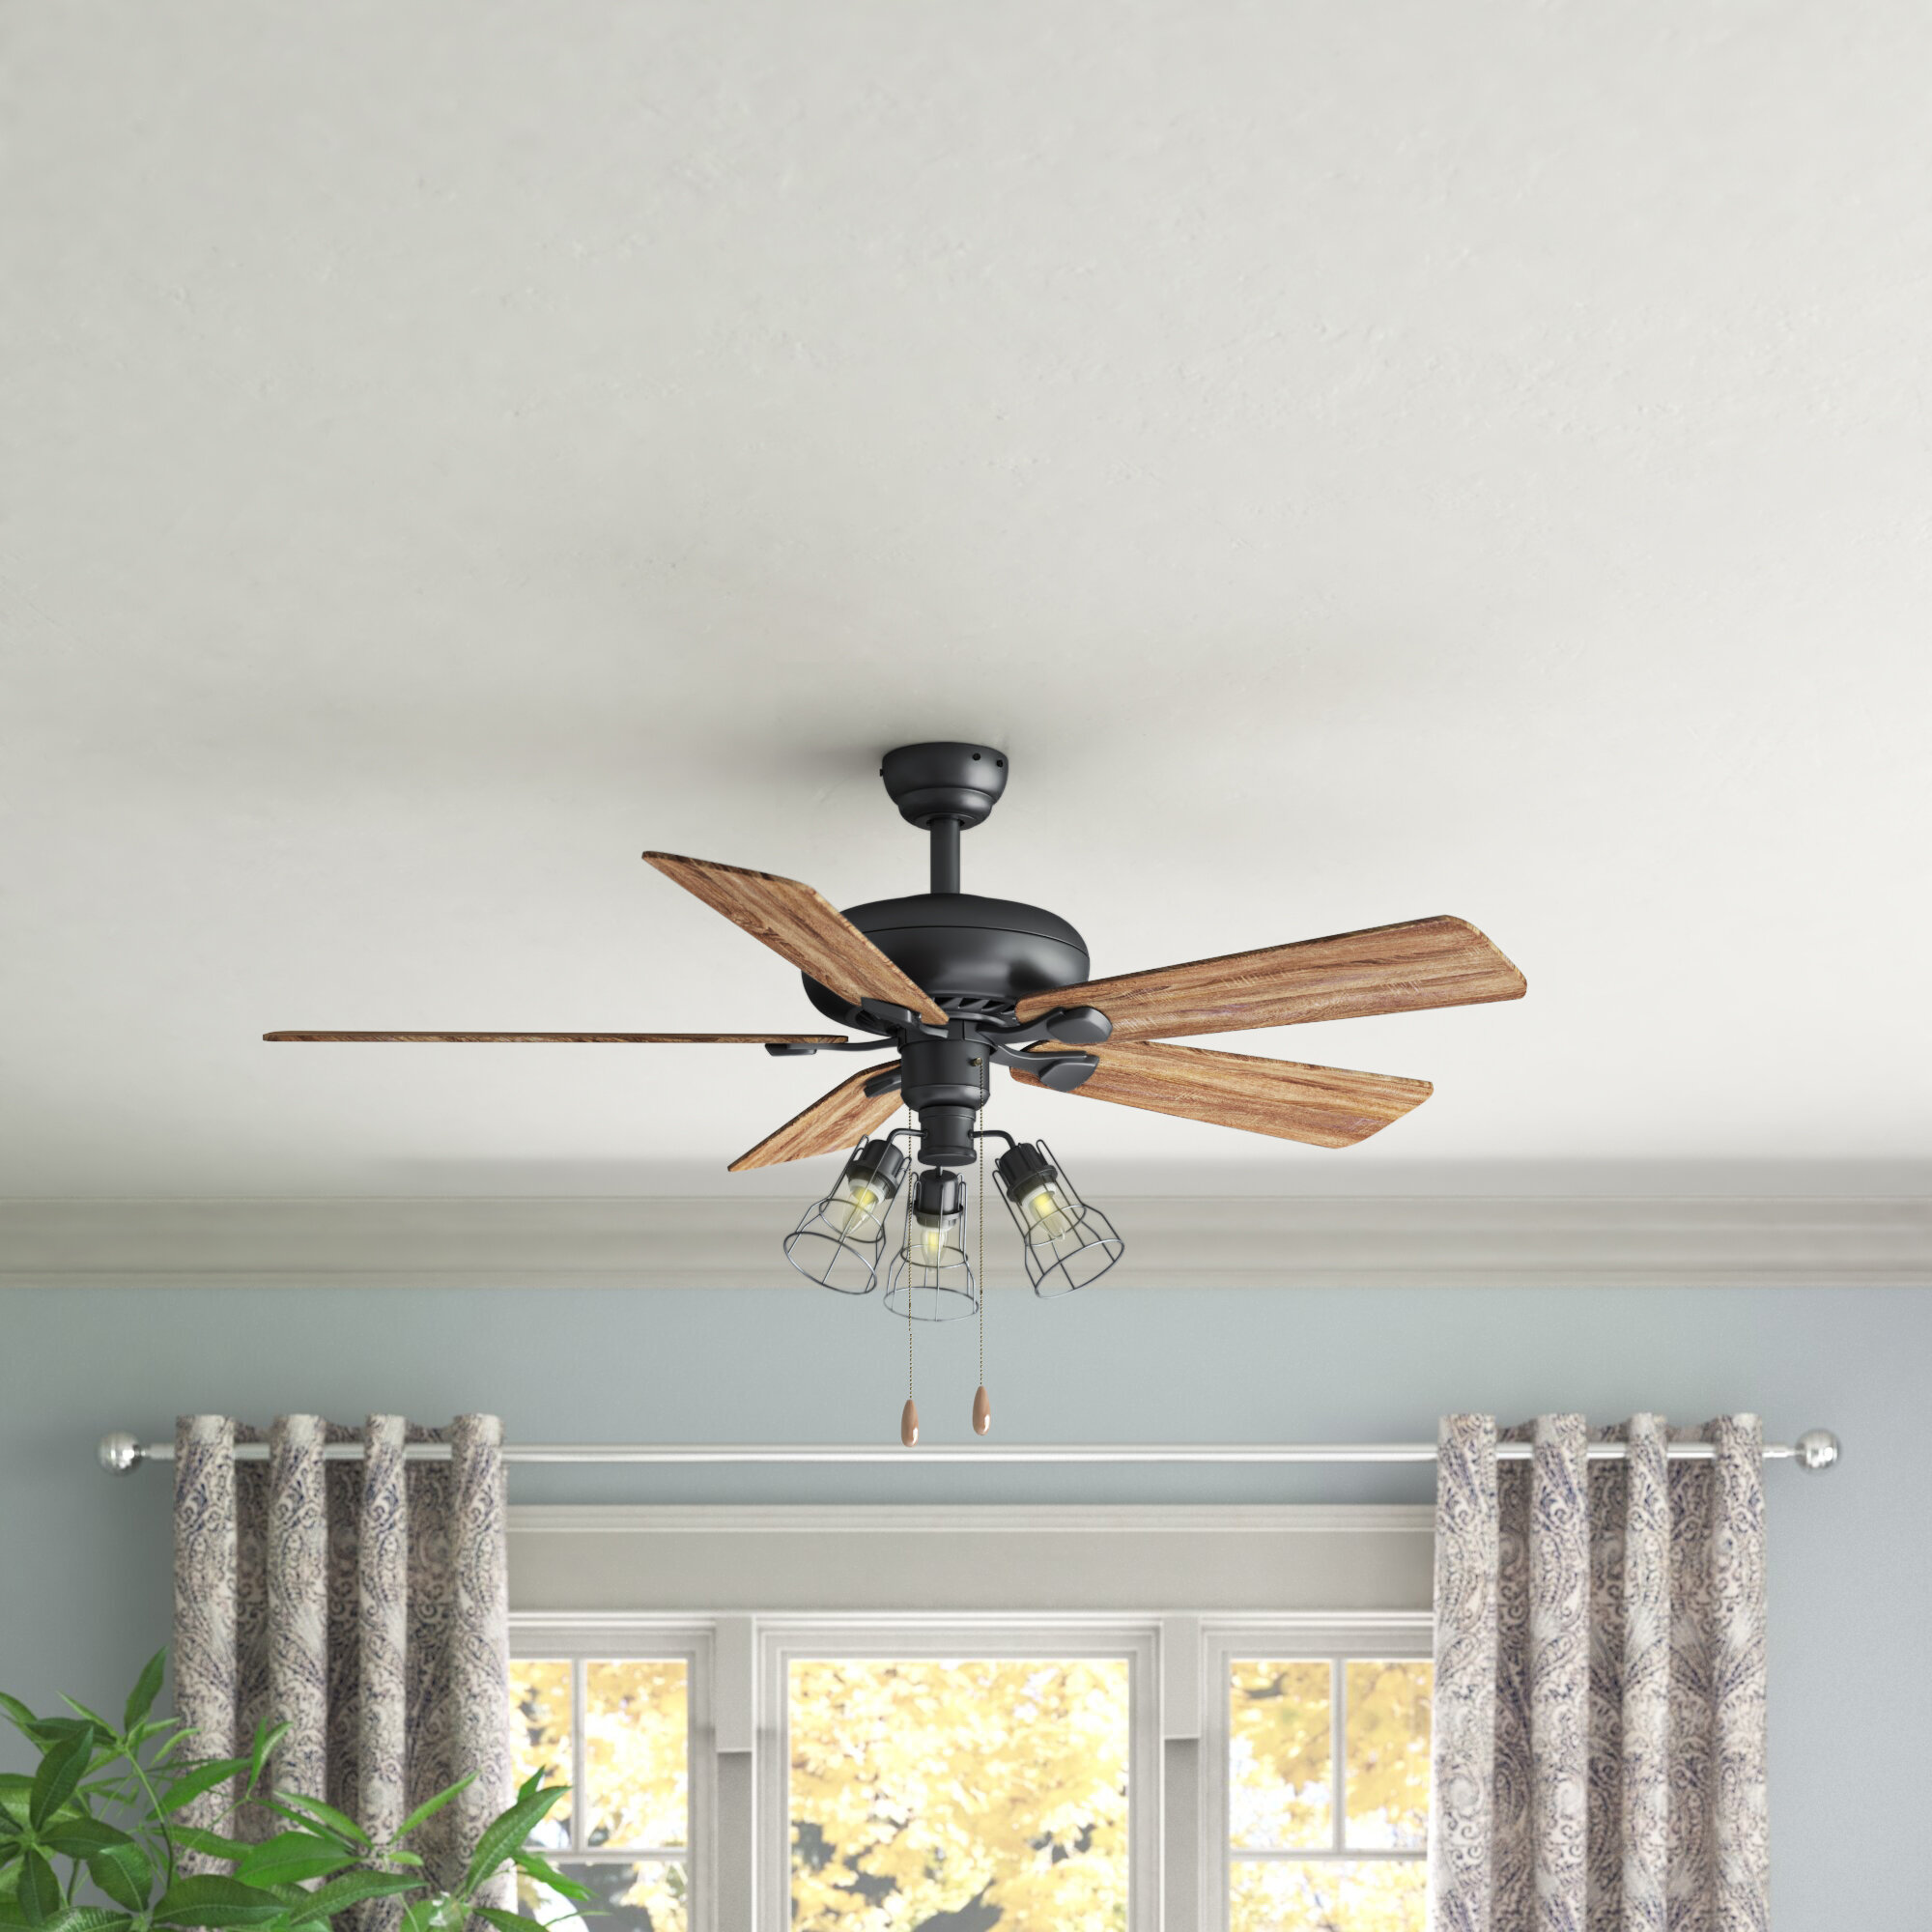 56" Indoor Ceiling Fan Light Reversible Blades Vintage Look Crystal Chandelier 